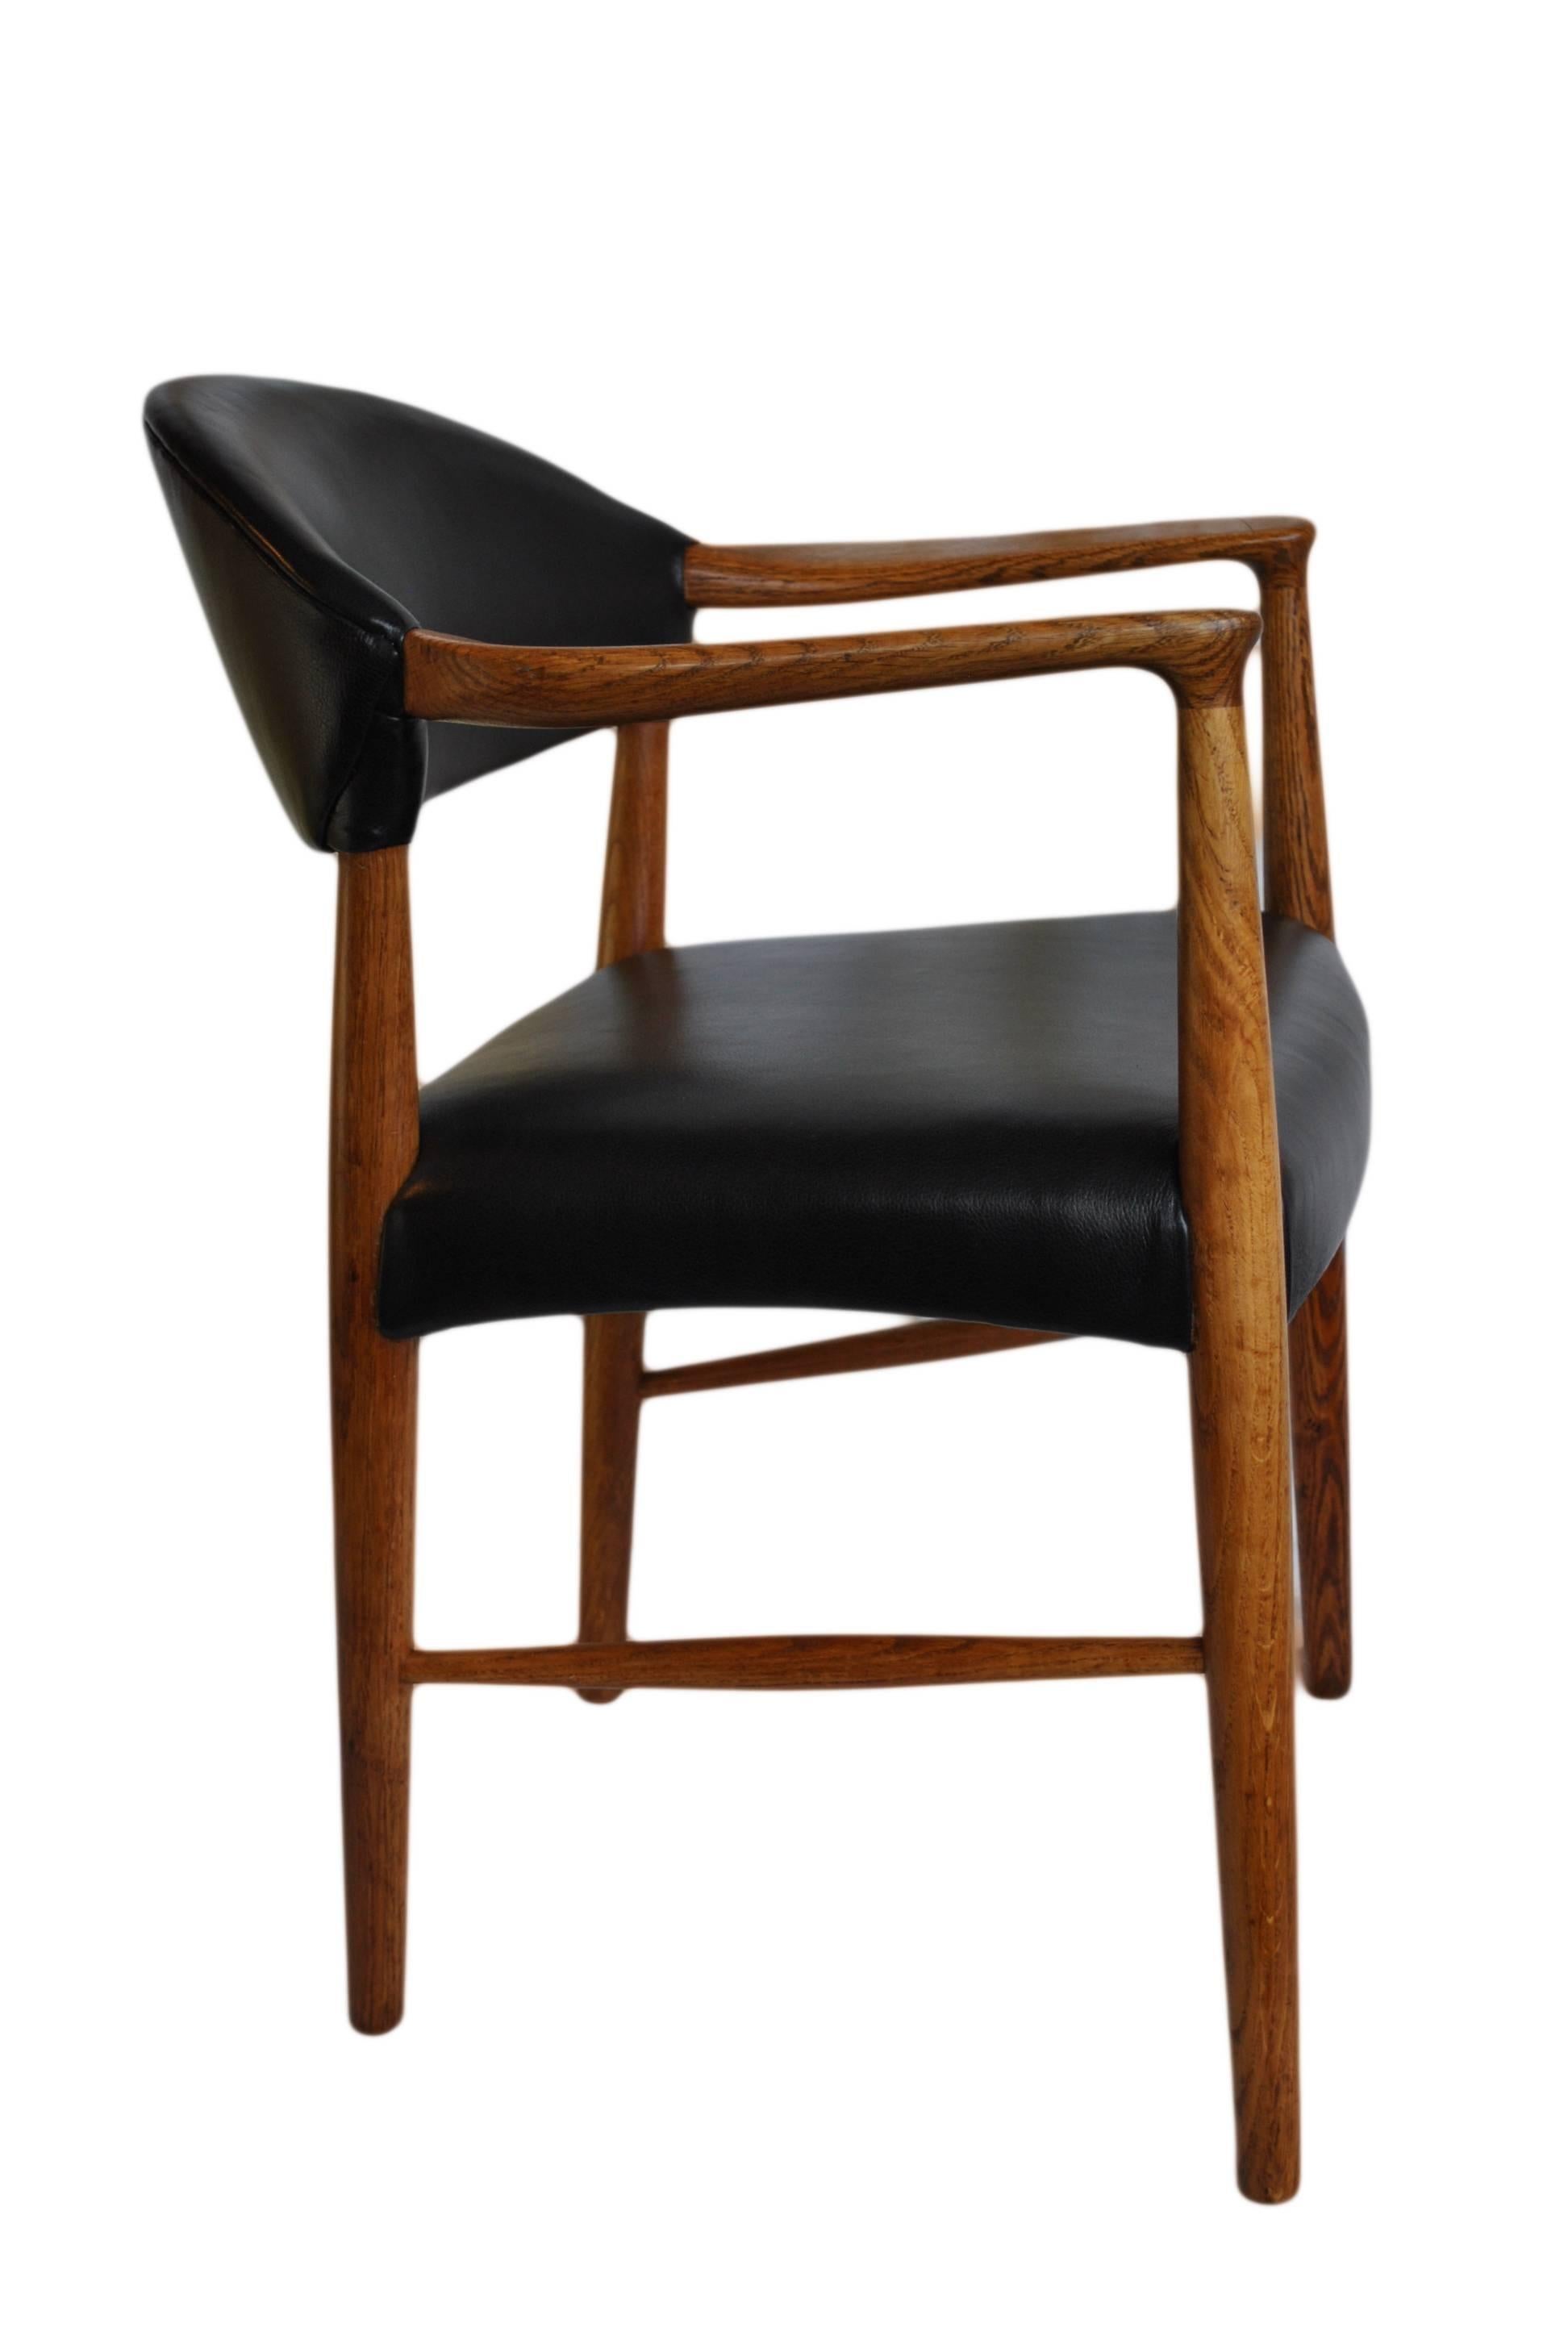 20th Century Kurt Olsen chair, fully reupholstered in black leather.